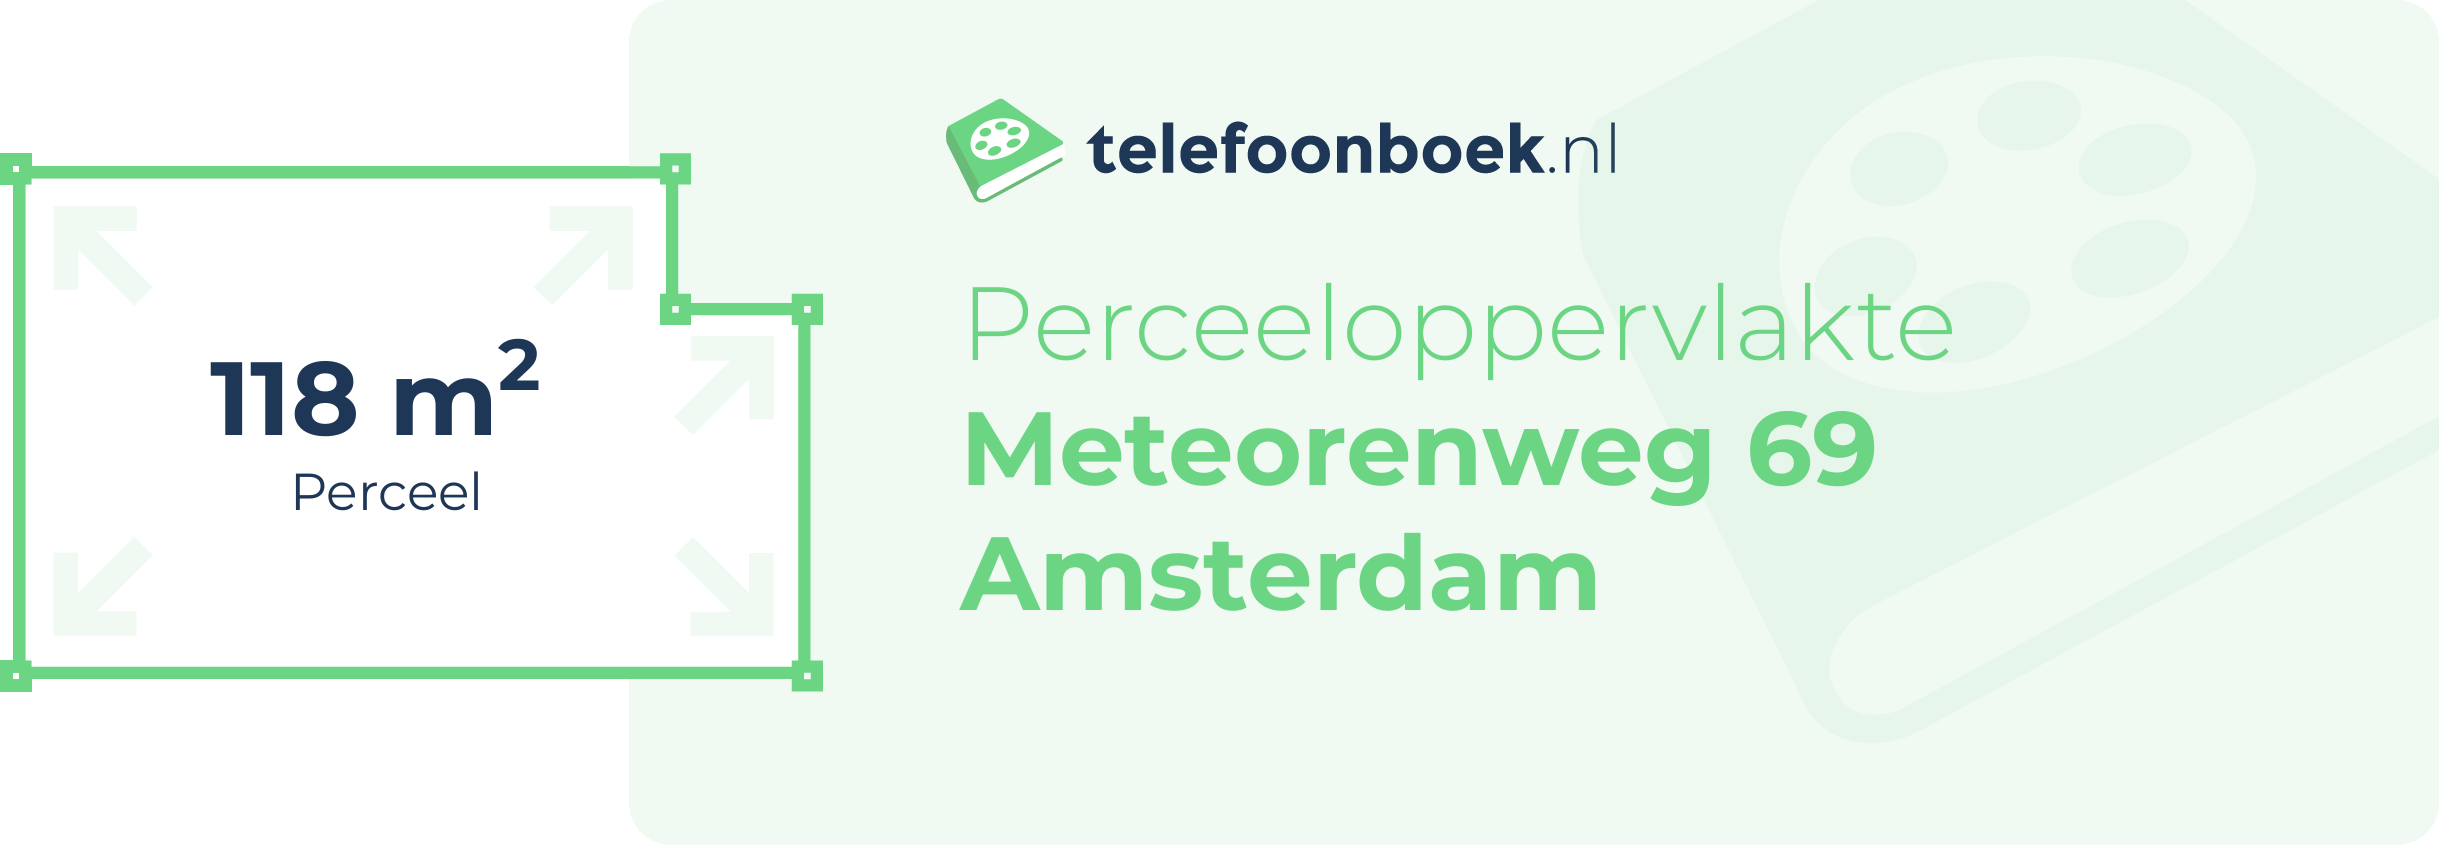 Perceeloppervlakte Meteorenweg 69 Amsterdam